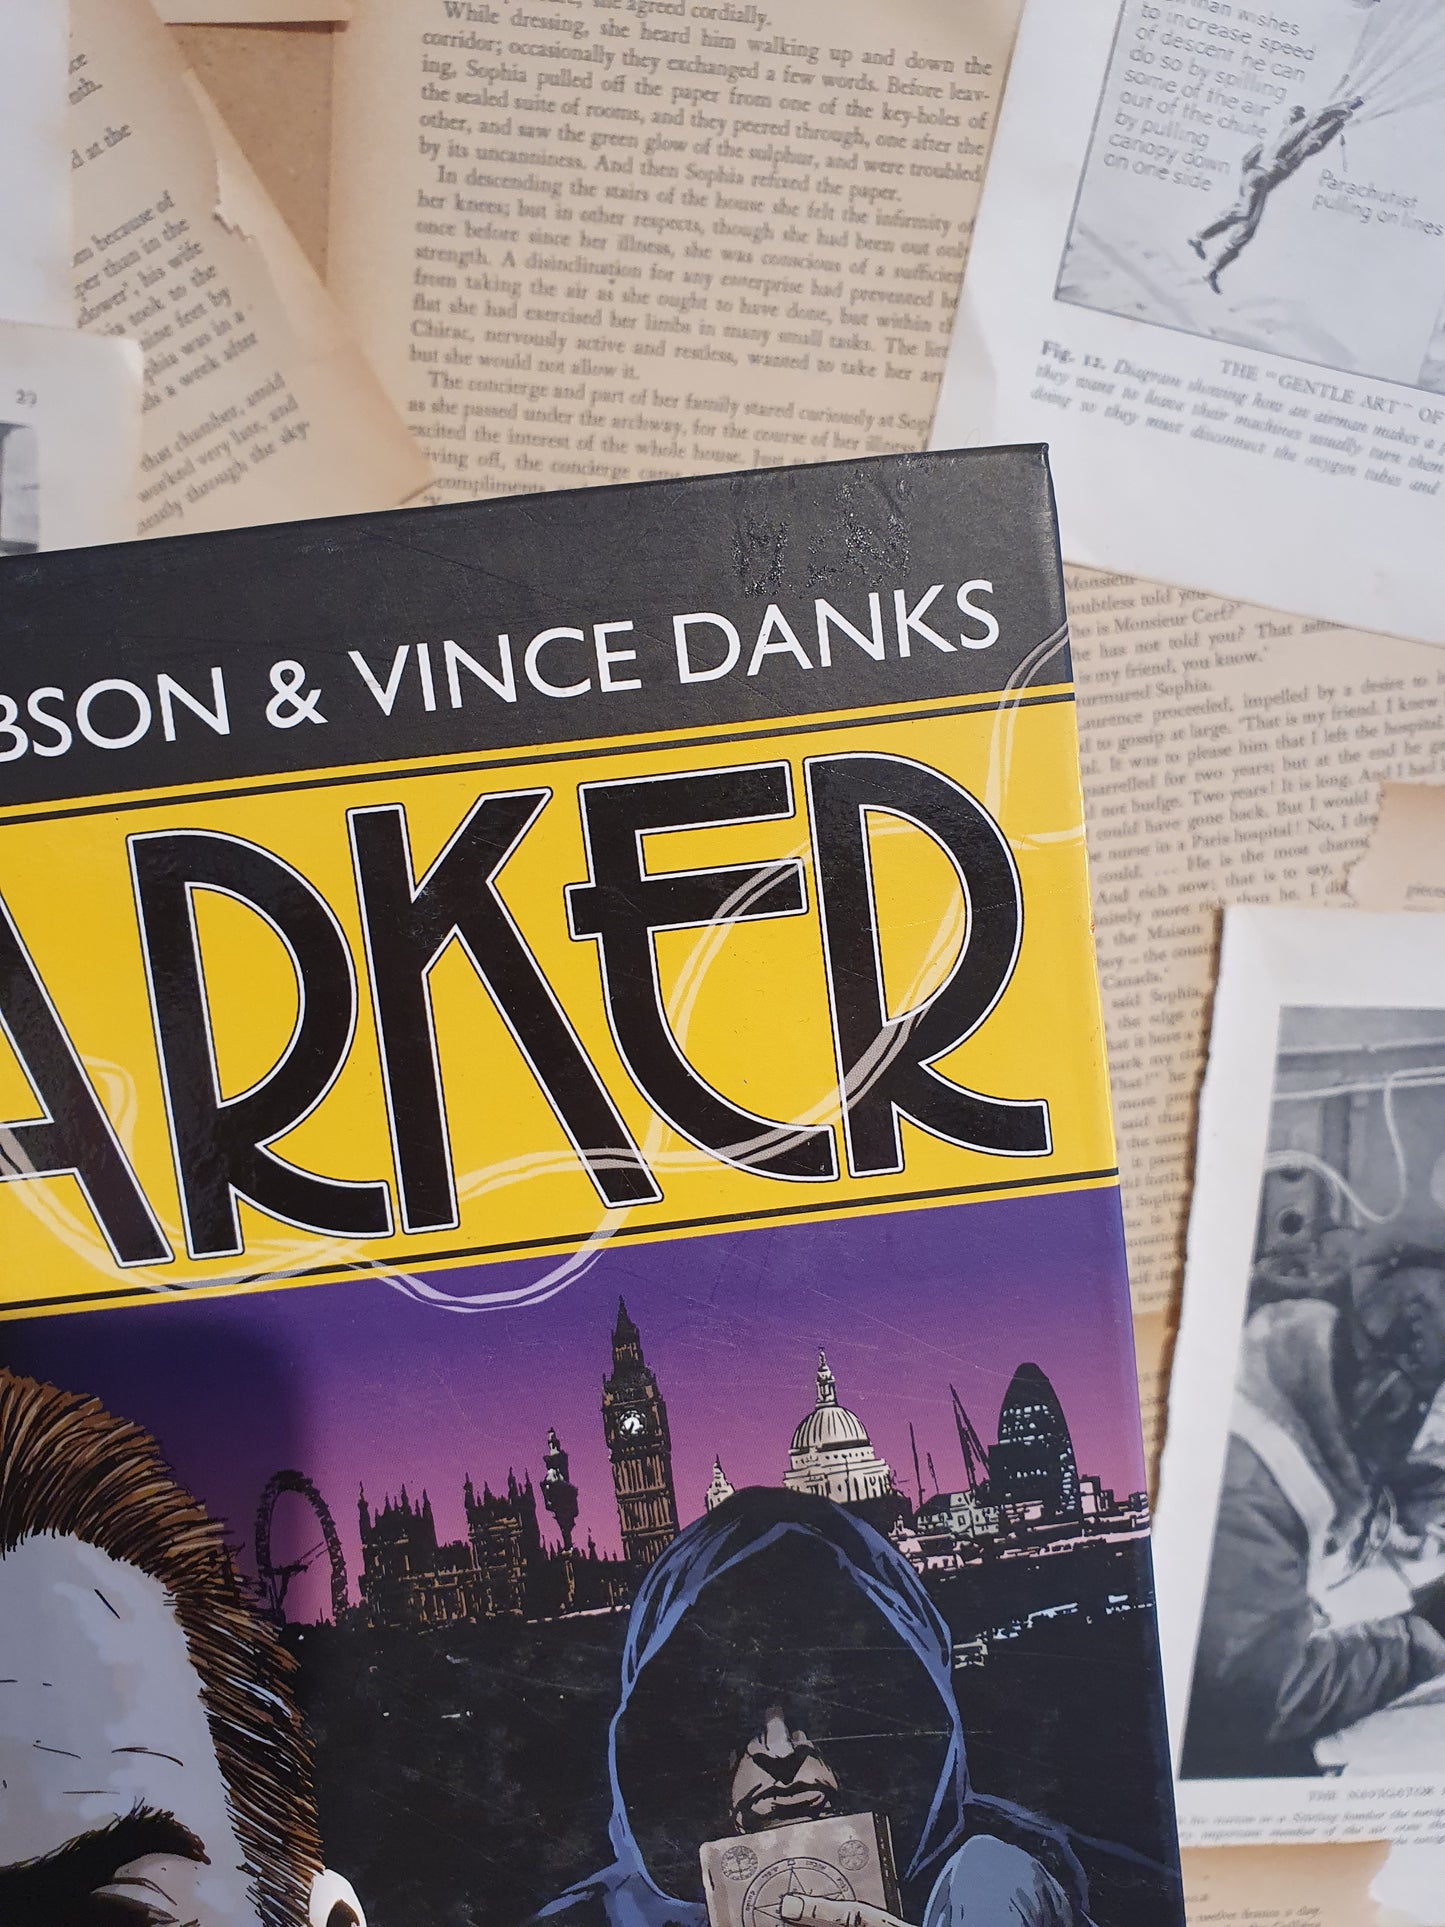 Harker: The Book of Solomon by Gibson & Danks (2012)